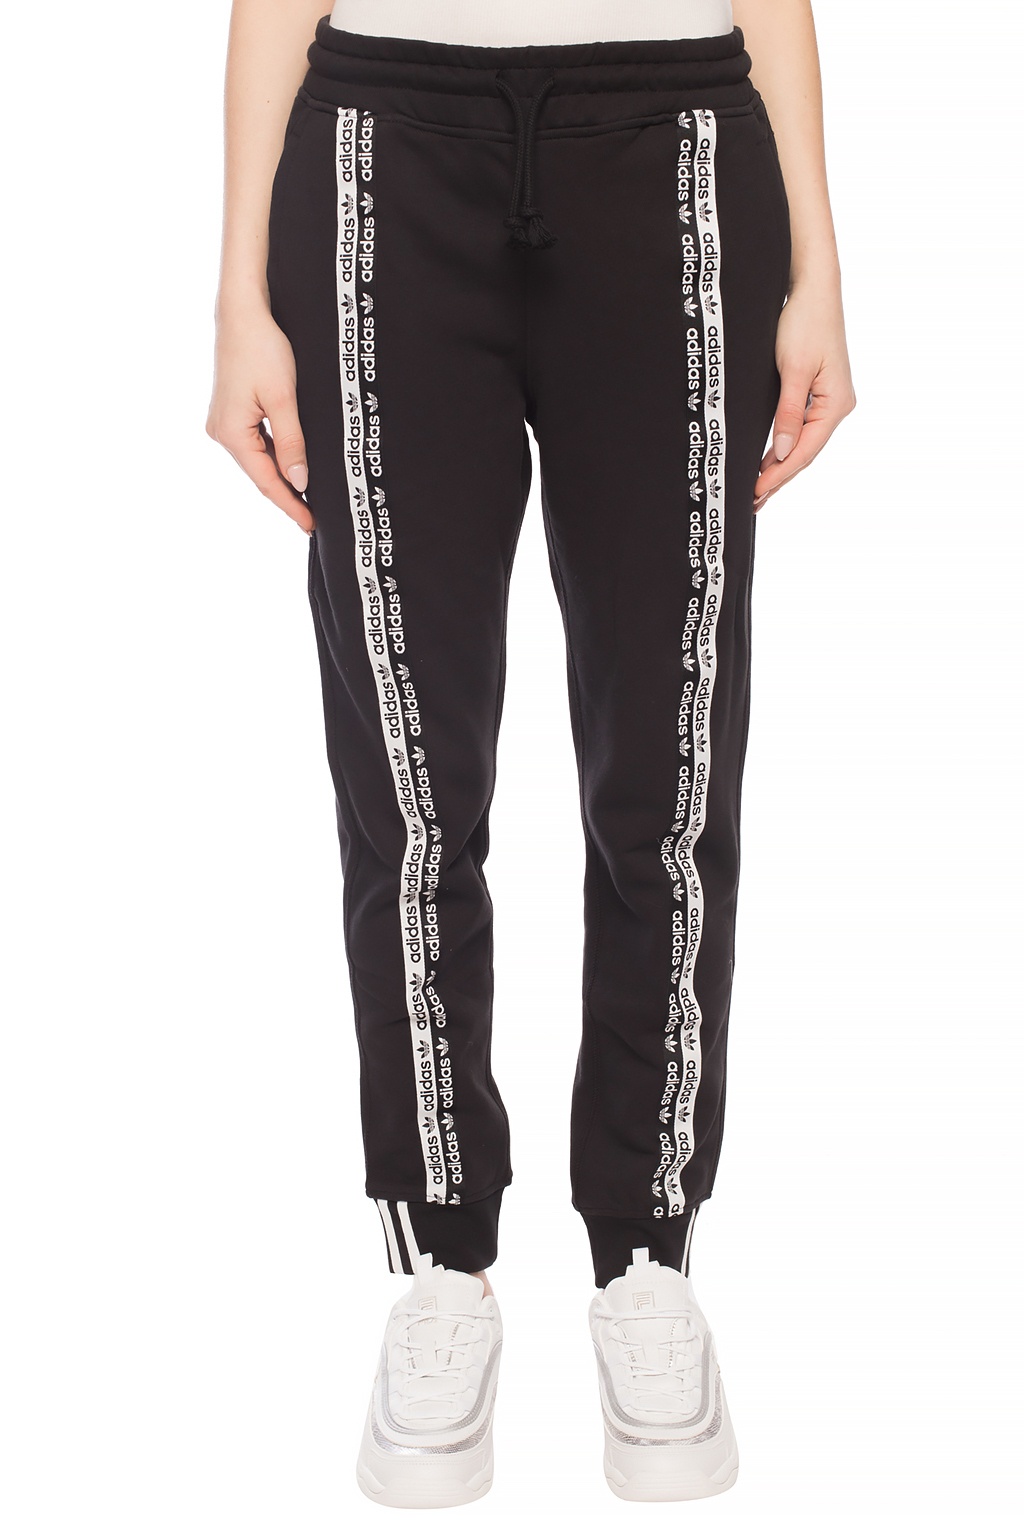 ADIDAS Originals Side-stripe sweatpants | Women's Clothing | Vitkac